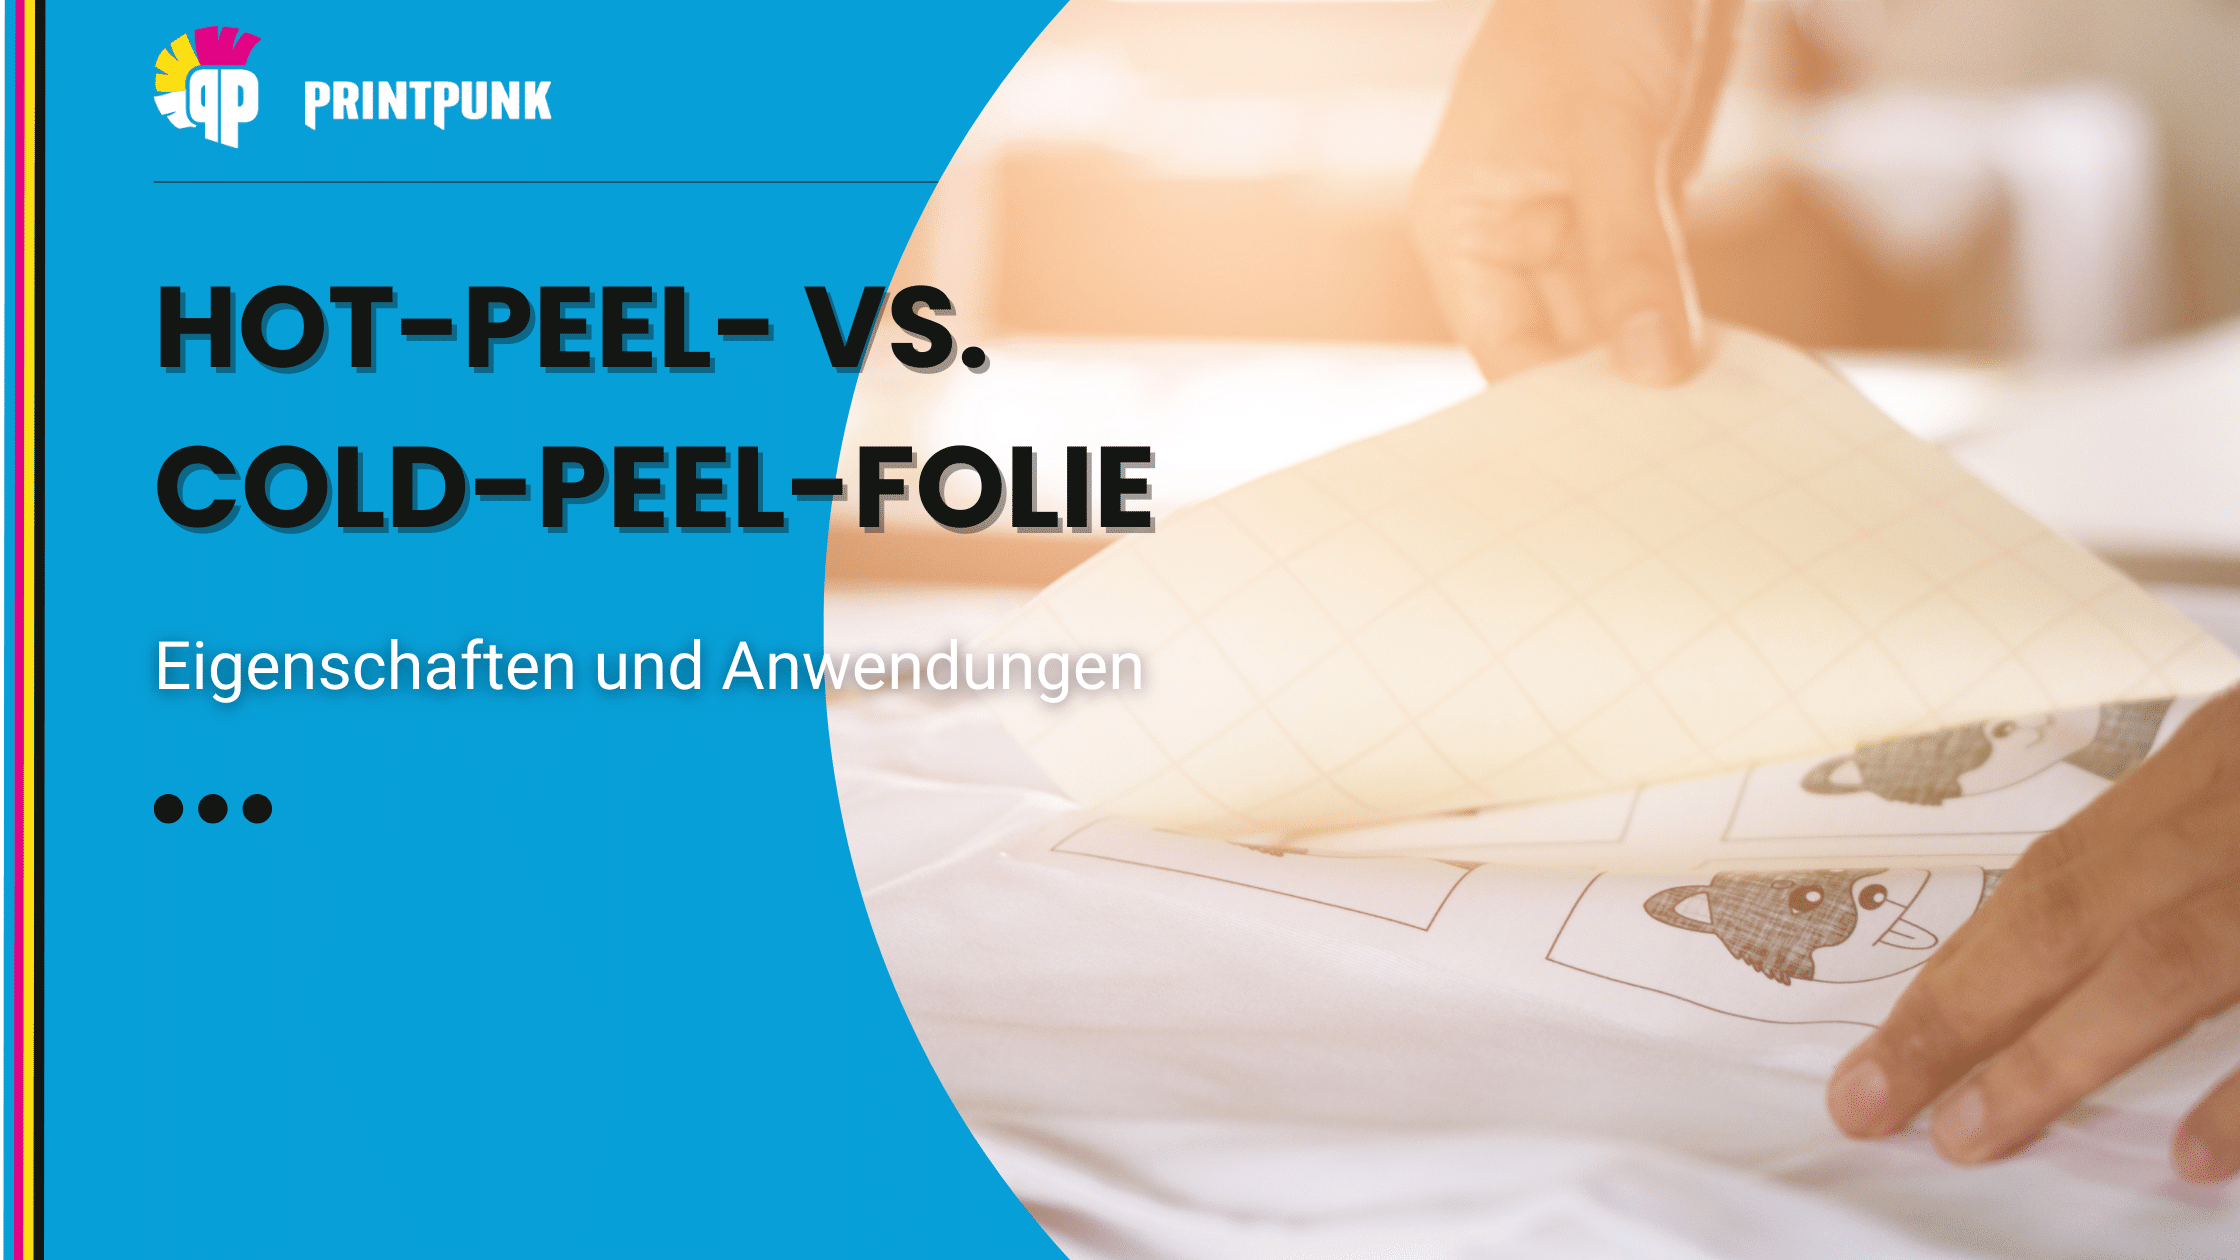 Hot-Peel- vs. Cold-Peel-Folie